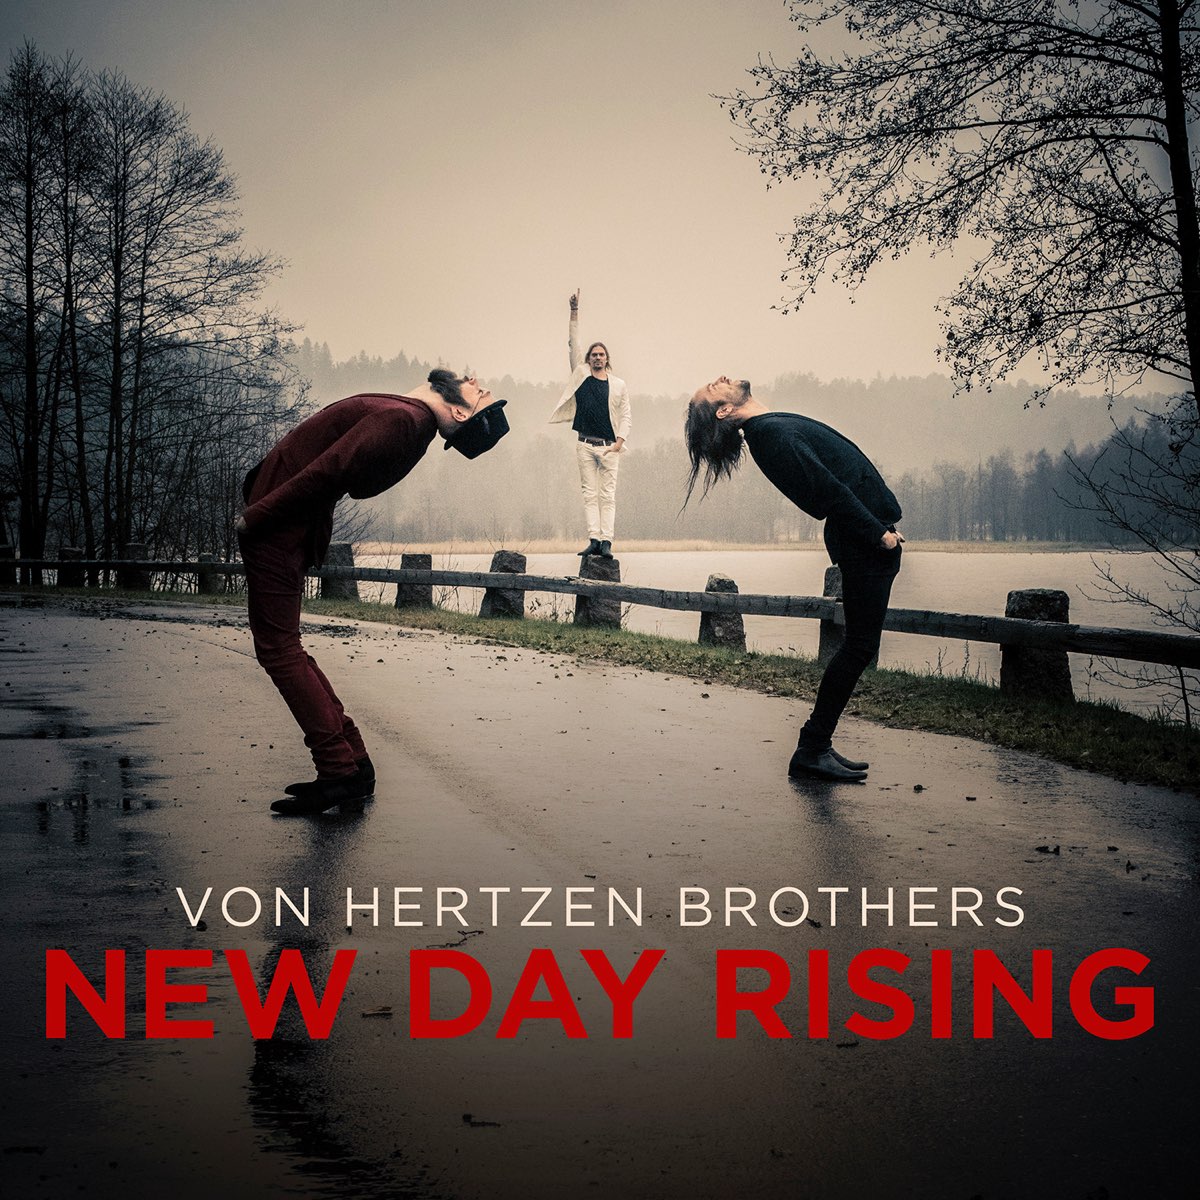 Von Hertzen brothers - New Day Rising. Nine Lives von Hertzen brothers. 1985 - New Day Rising. Von Hertzen brothers - experience.